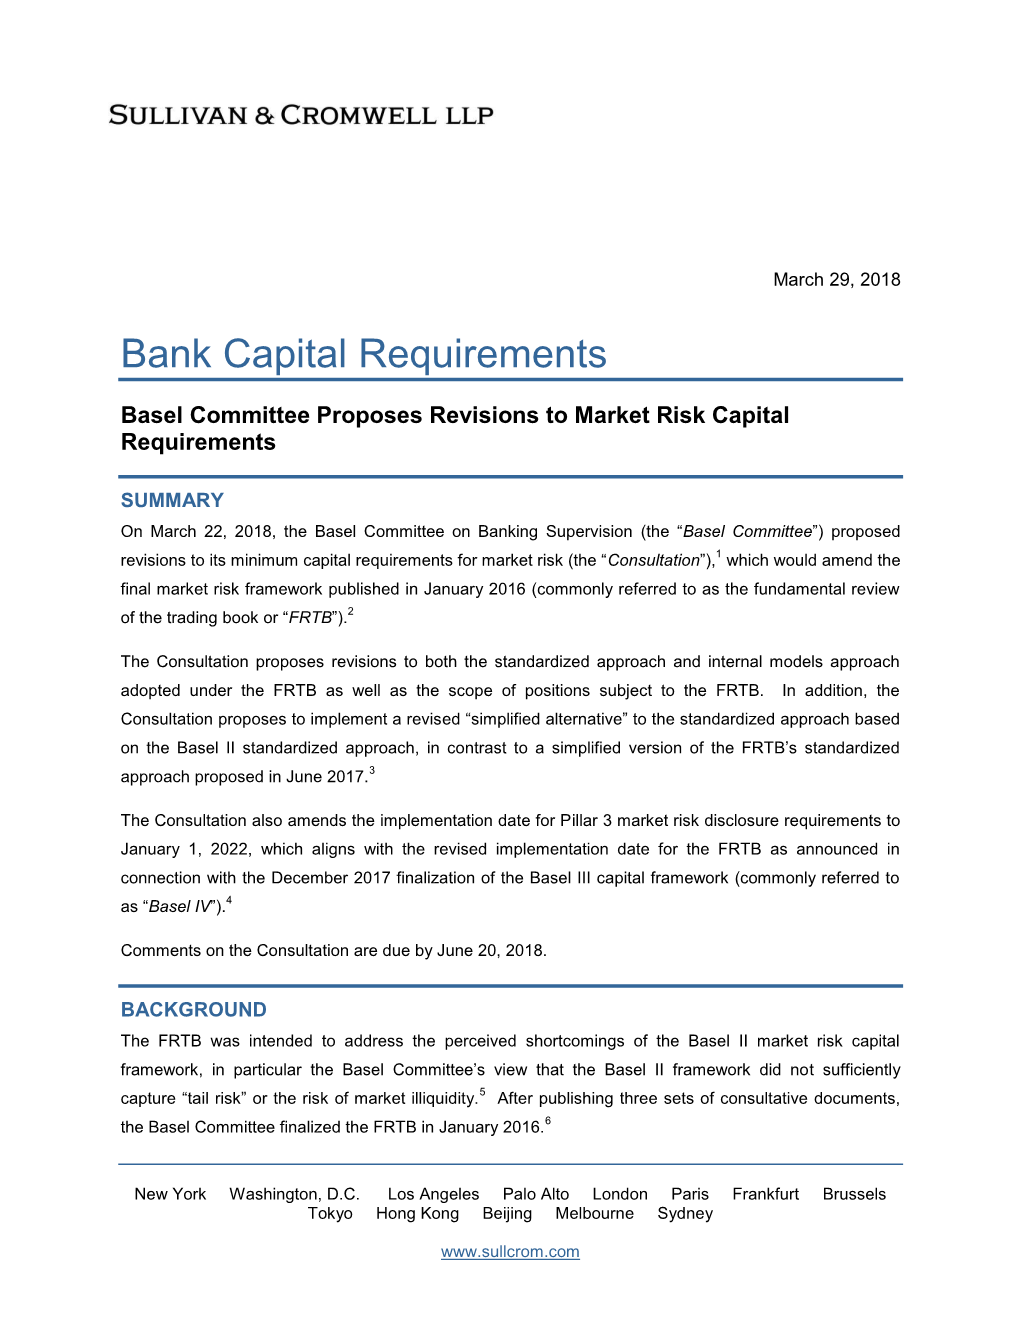 Bank Capital Requirements